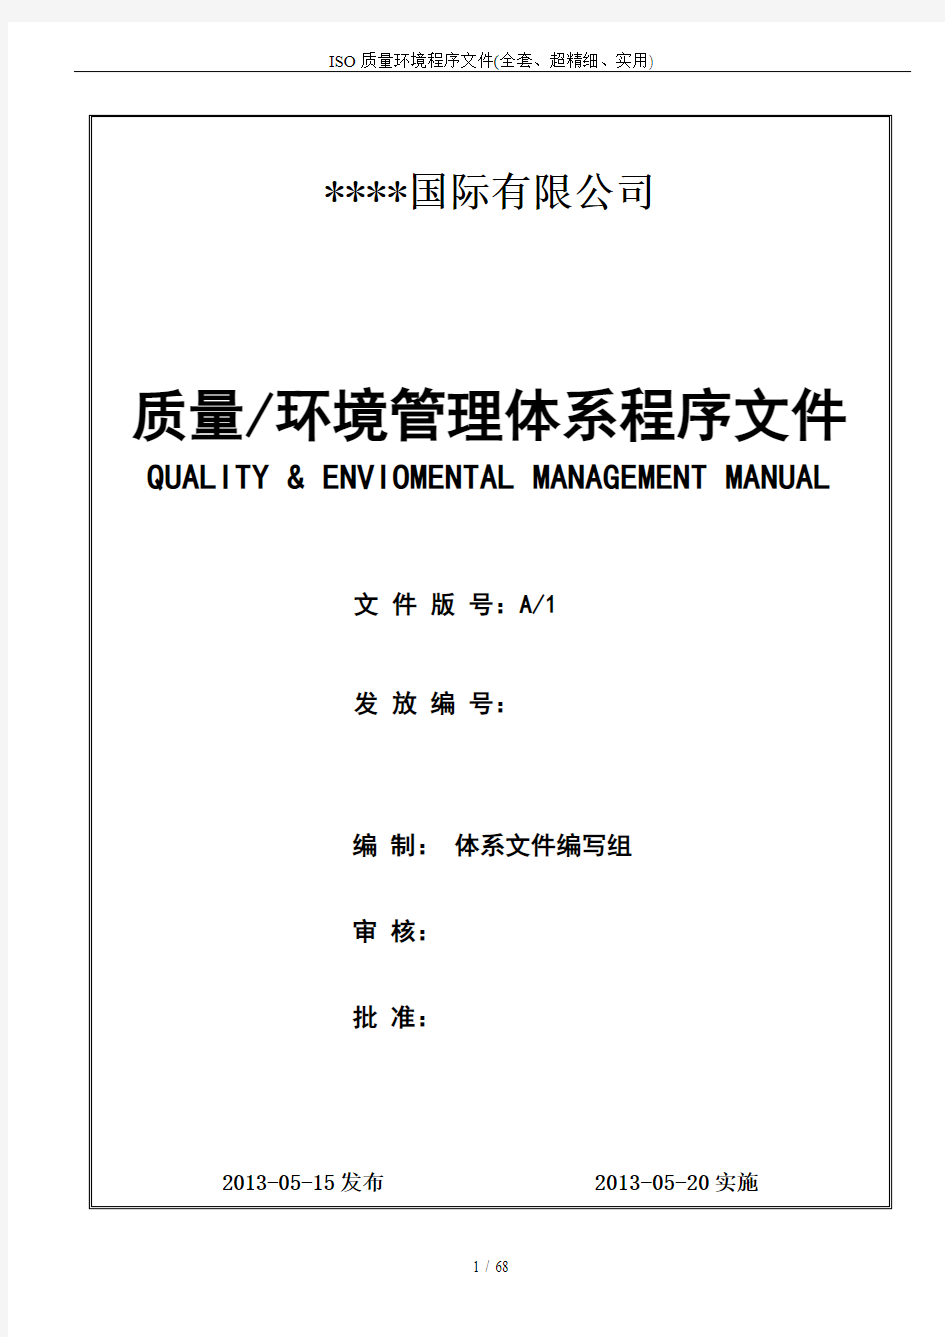 ISO质量环境程序文件(全套、超精细、实用)